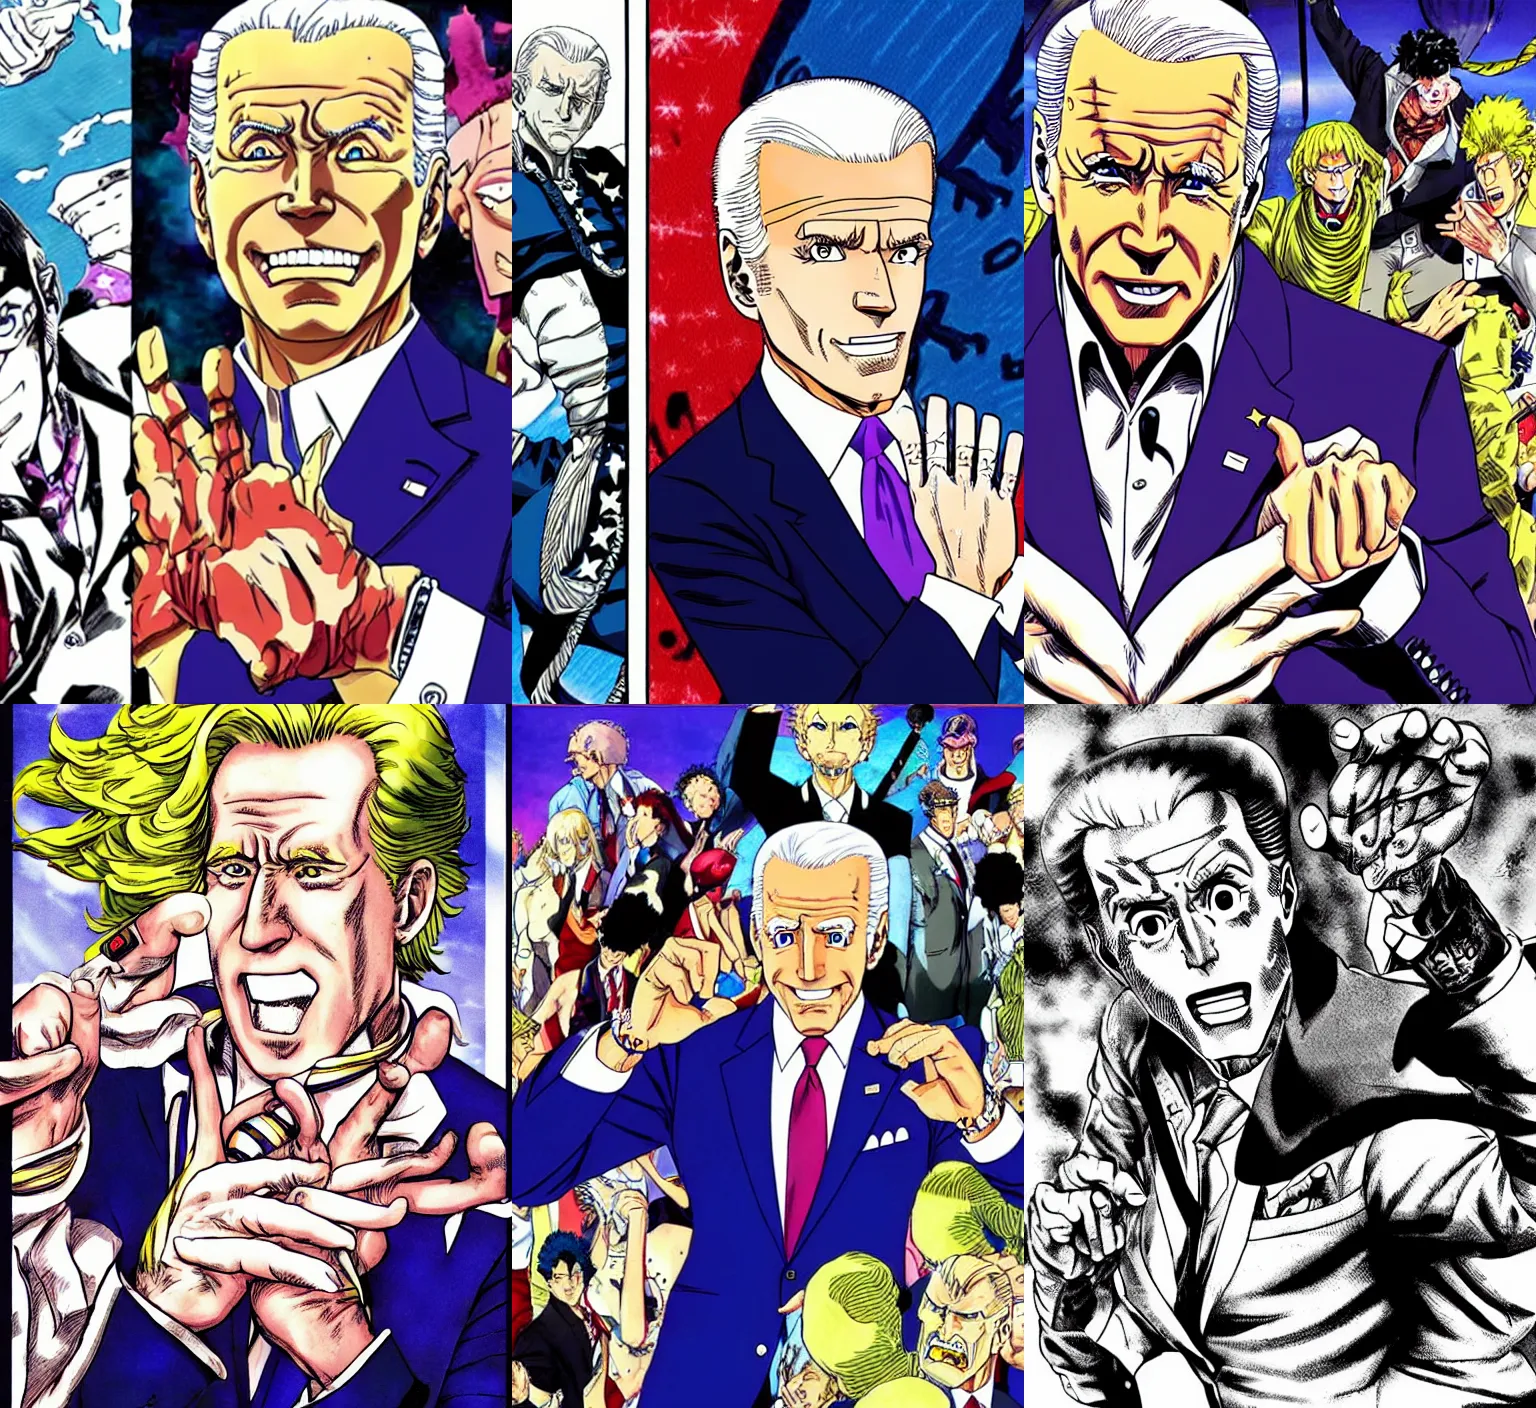 Prompt: Joe Biden in Jojo's Bizarre Adventure manga, illustrated by Hirohiko Araki